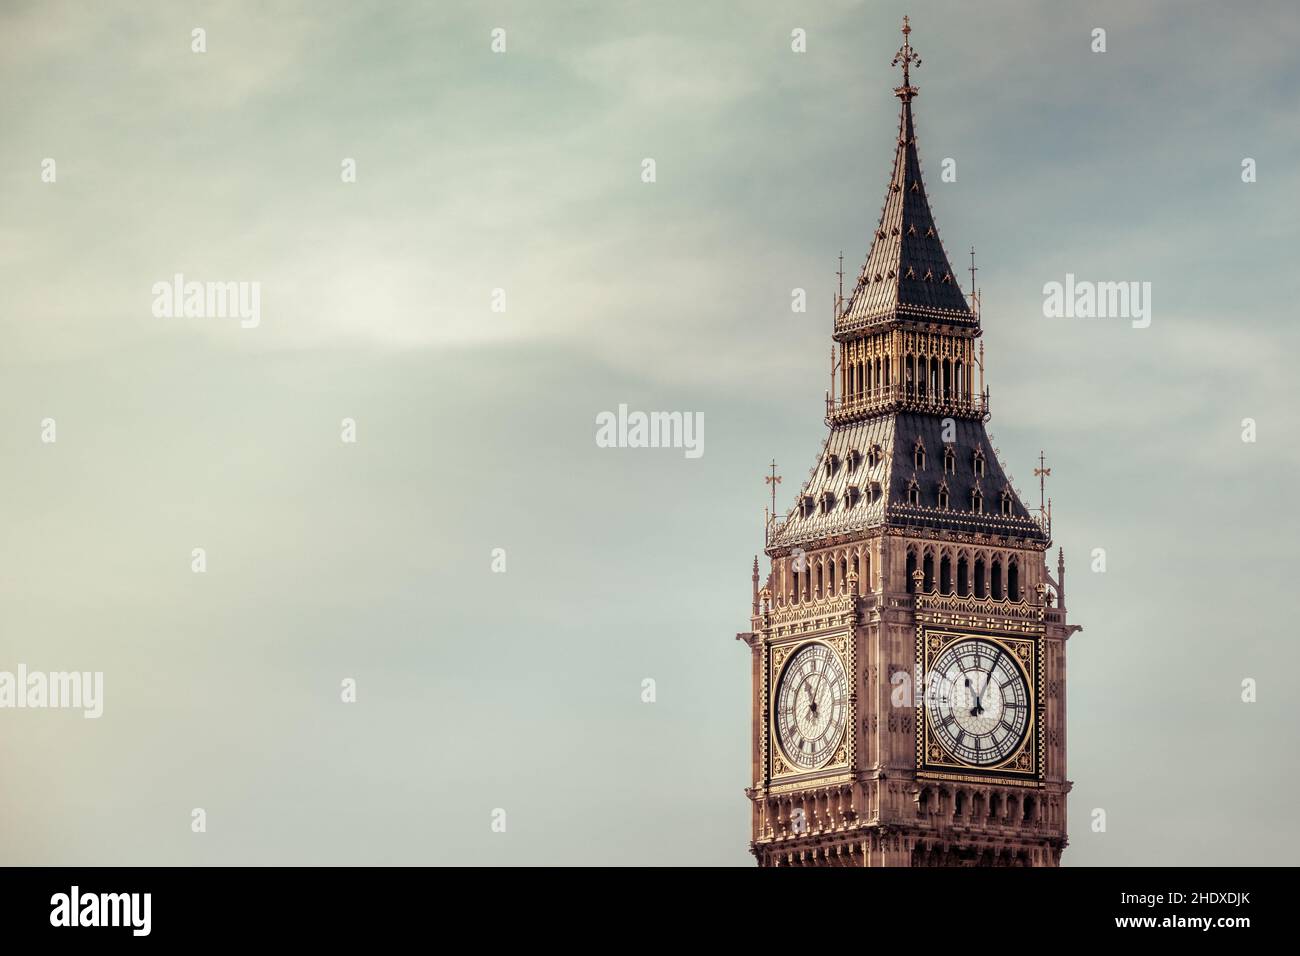 elizabeth tower, big bens, clock tower, clock-tower, clocktow, the clock tower Stock Photo